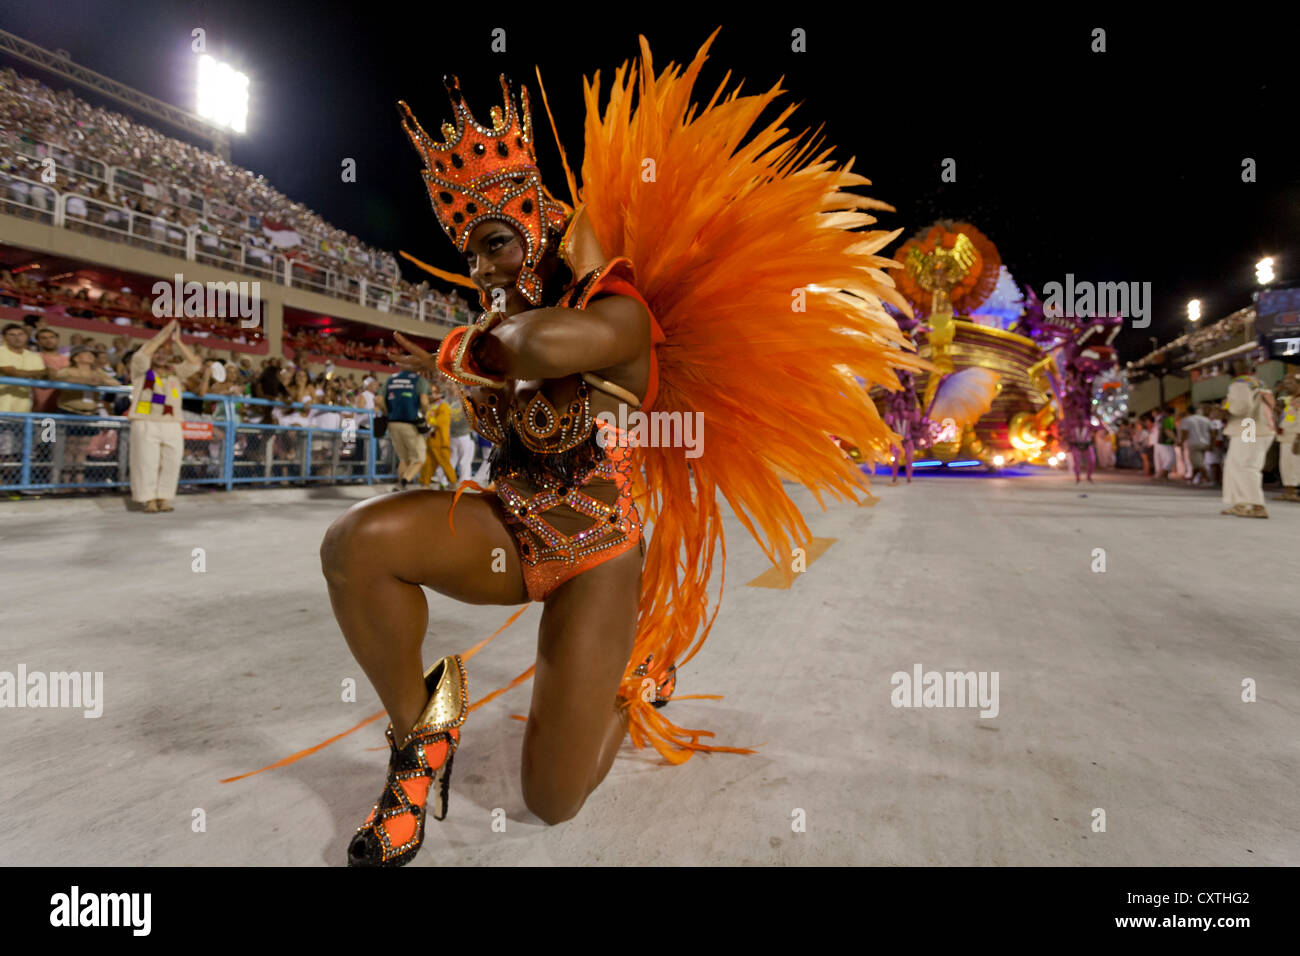 Woman Kneeling in Bright Orange Costume During Carnival Parade Rio de Janeiro Brazil Stock Photo